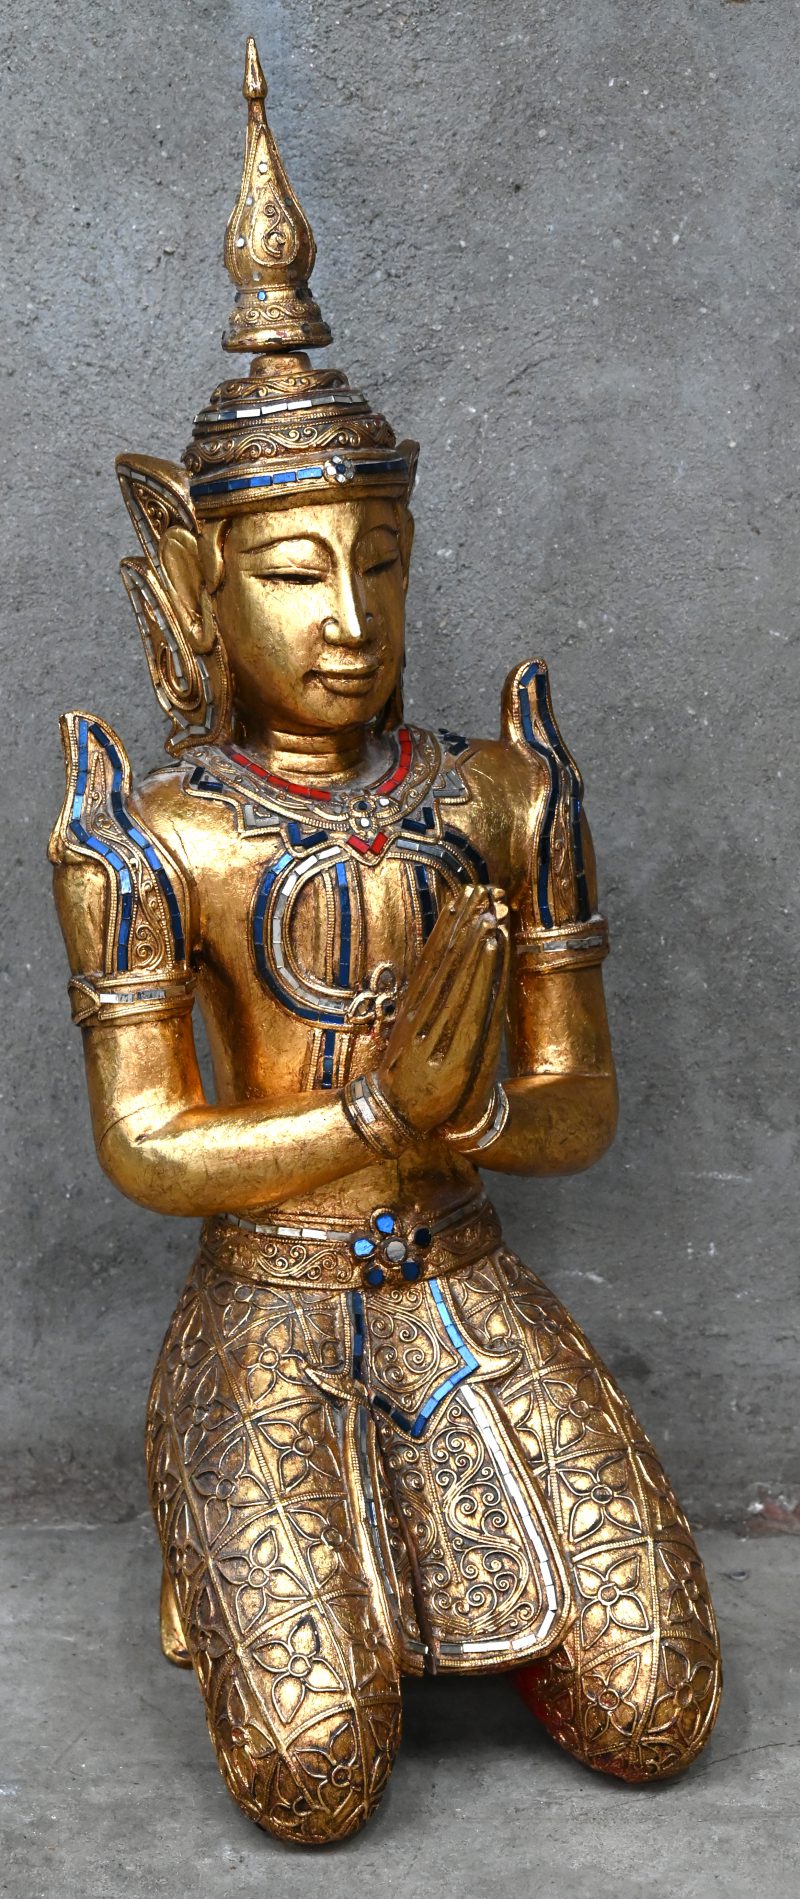 Een knielende Thaise Boeddha van verguld hout.